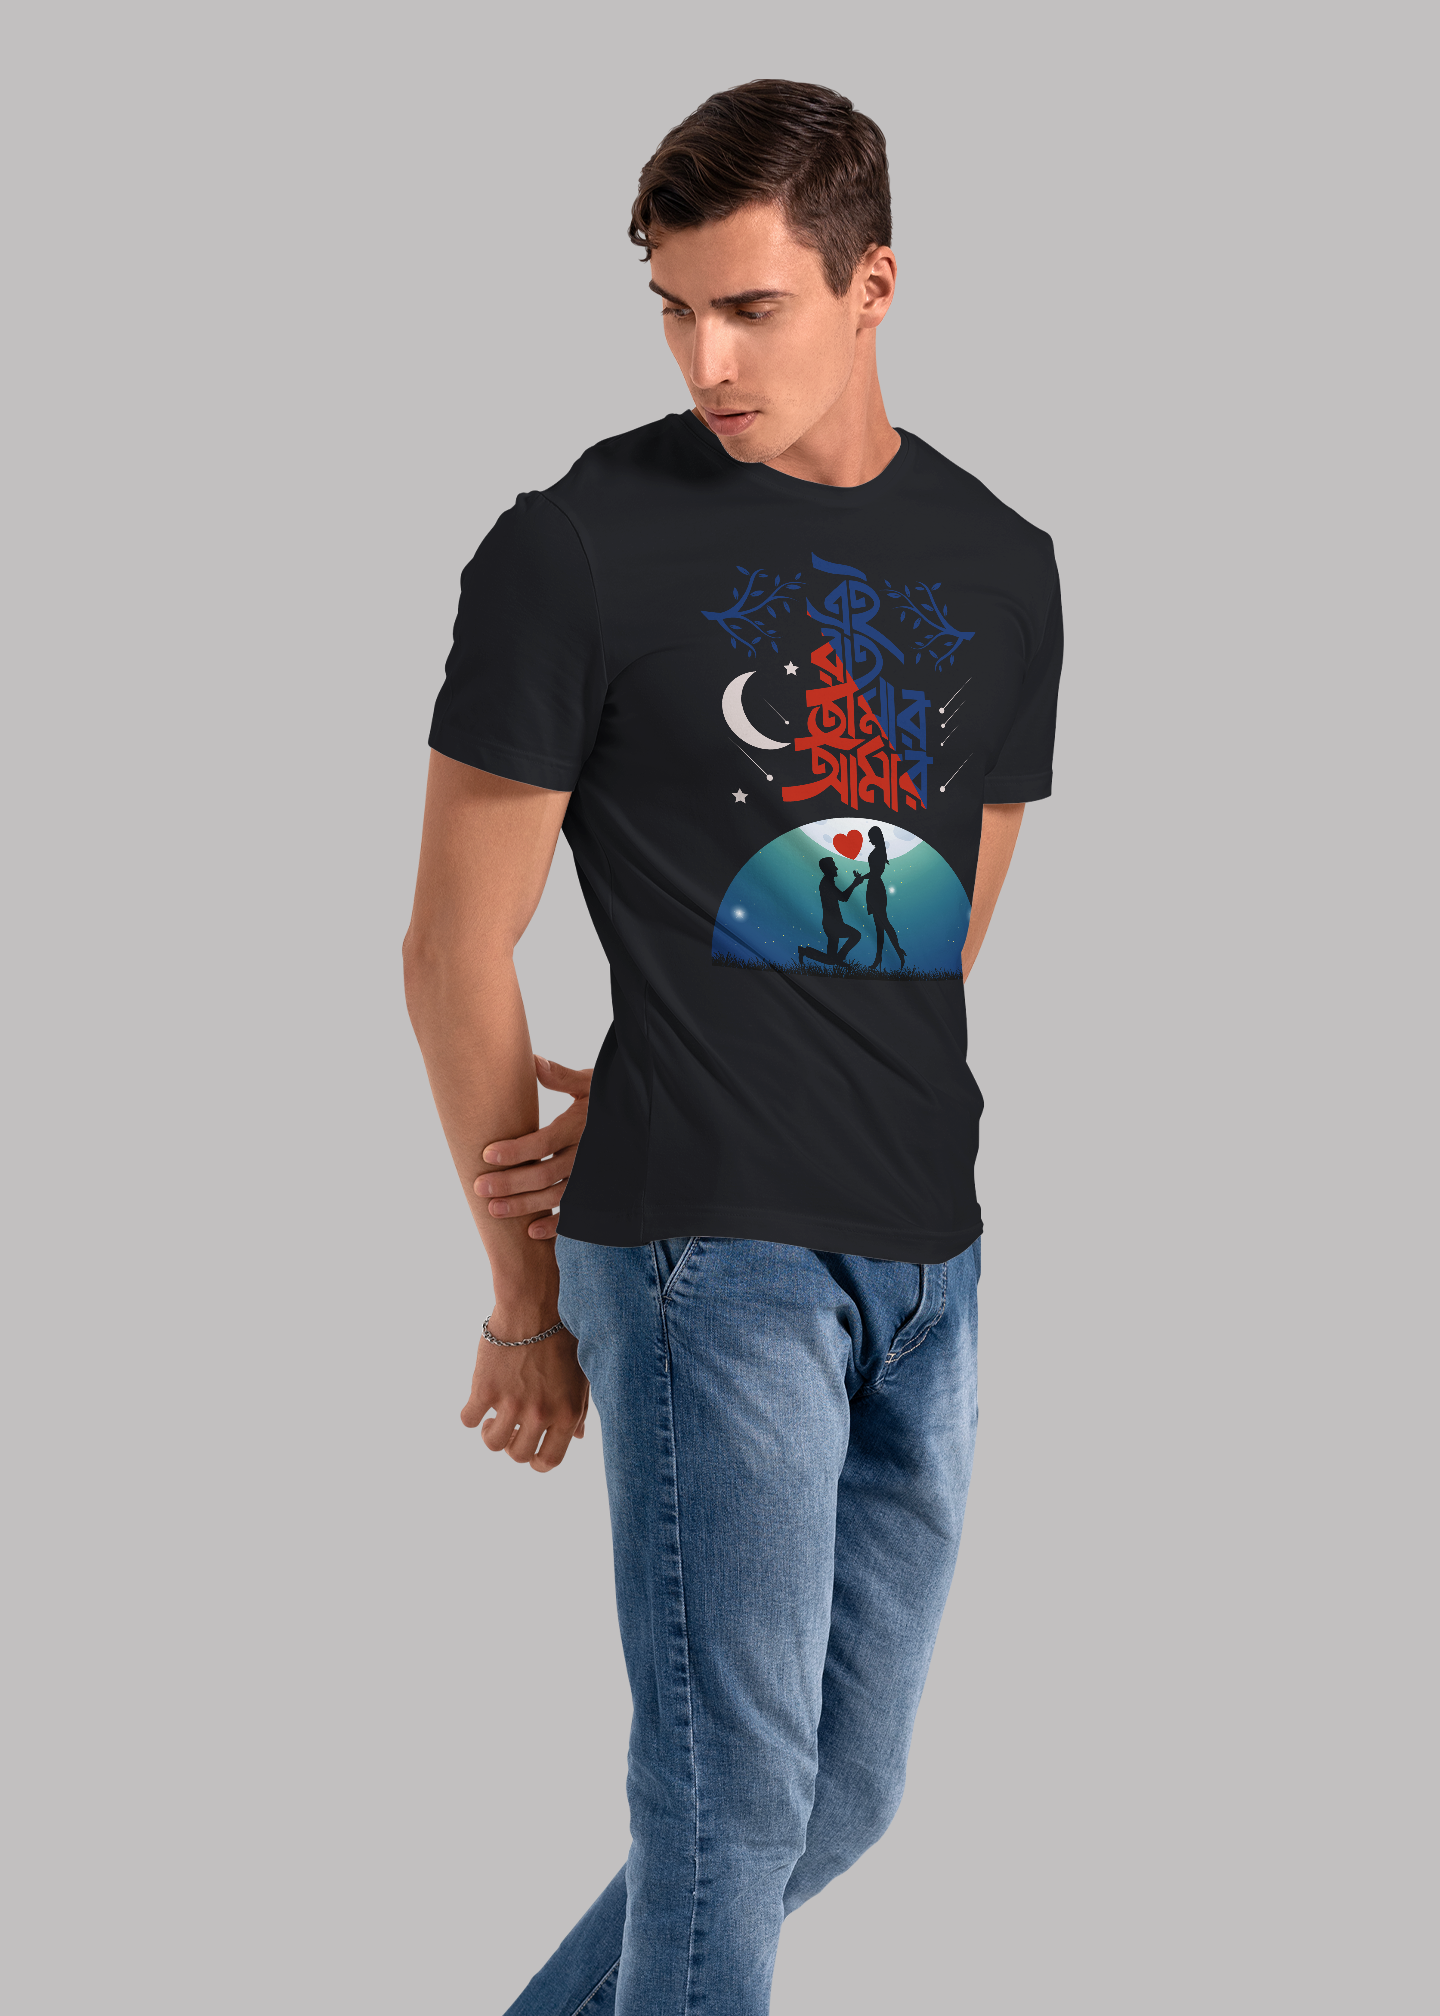 Ei raat tomar amar bengali Printed Half Sleeve Premium Cotton T-shirt For Men